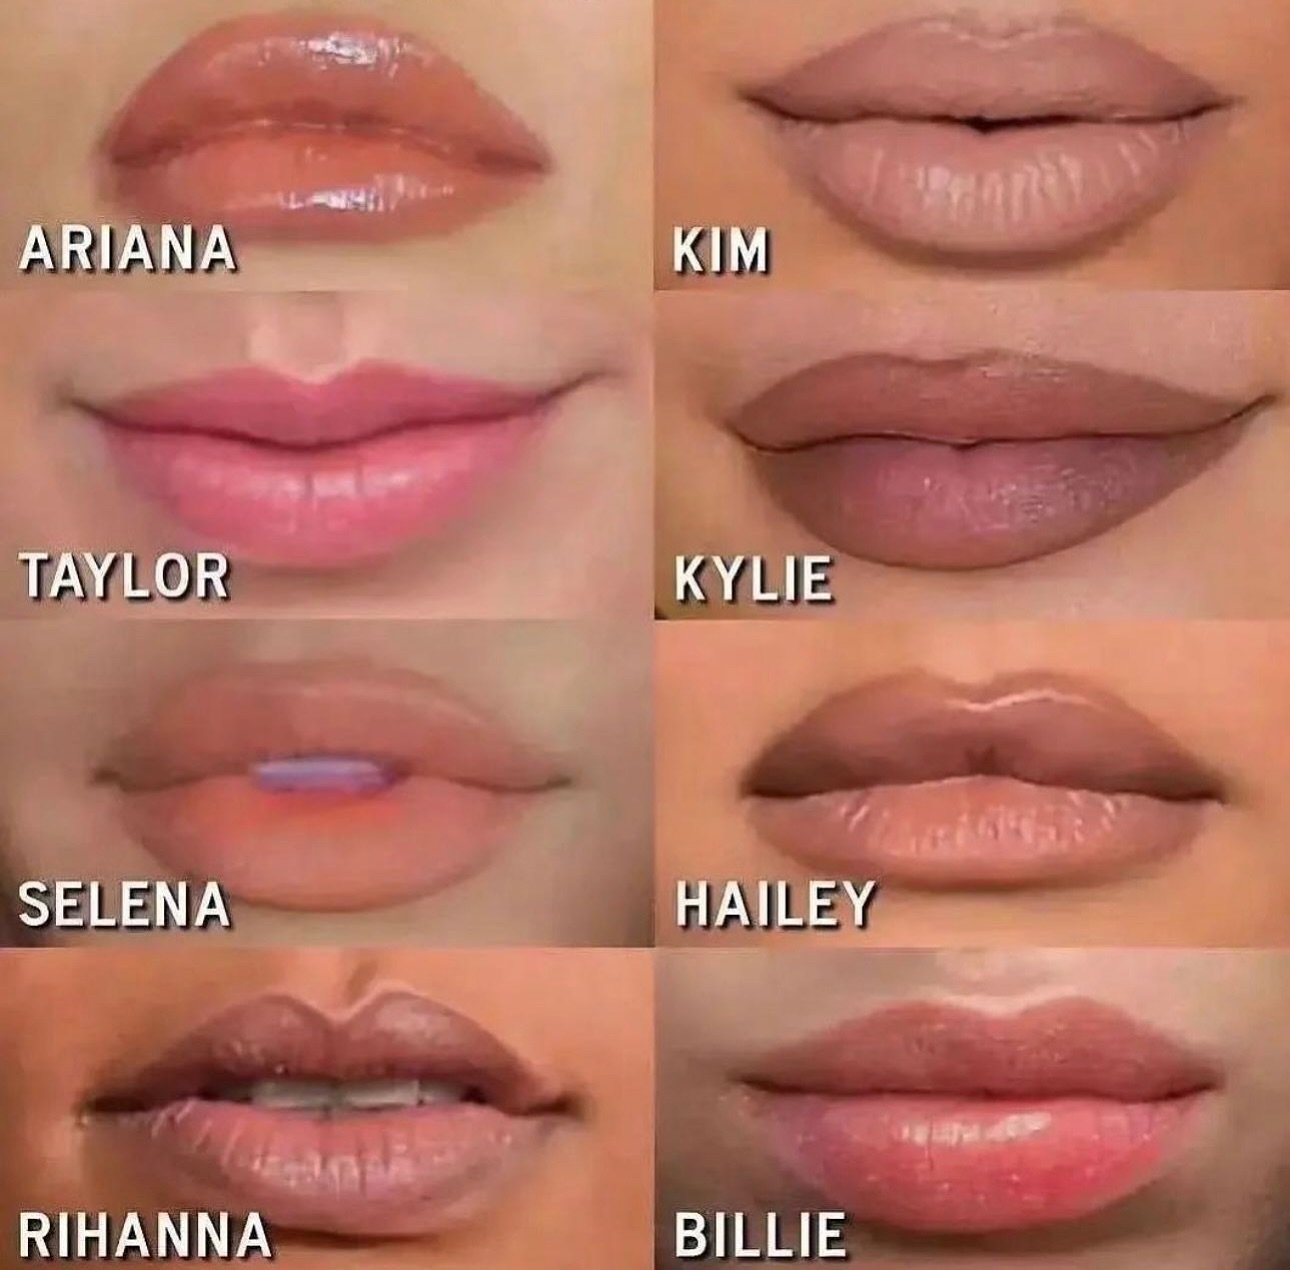 Which ones your favorite lip? Comment below 💉👄⬇️

#lipfiller #kardashians #rihanna #modaesthetica #lipfillers #filler